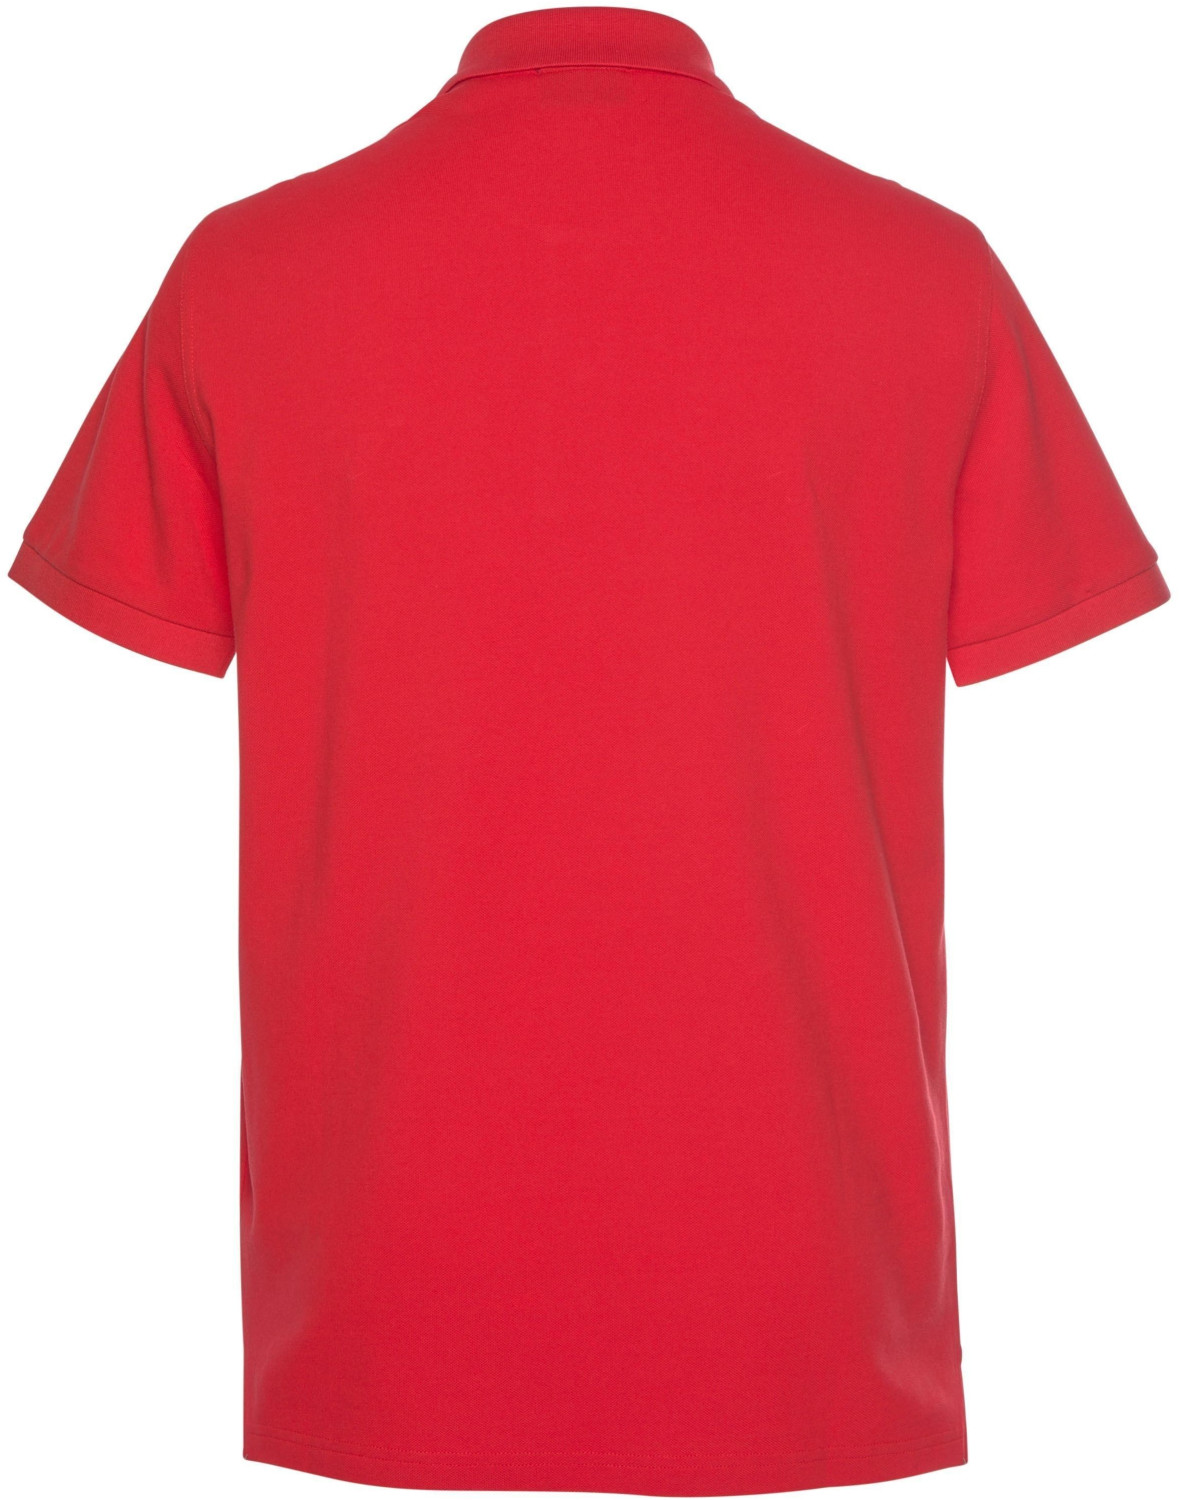 GANT Bestseller Piqué Polo (2201) € red Shirt Preisvergleich 51,95 ab bei | bright